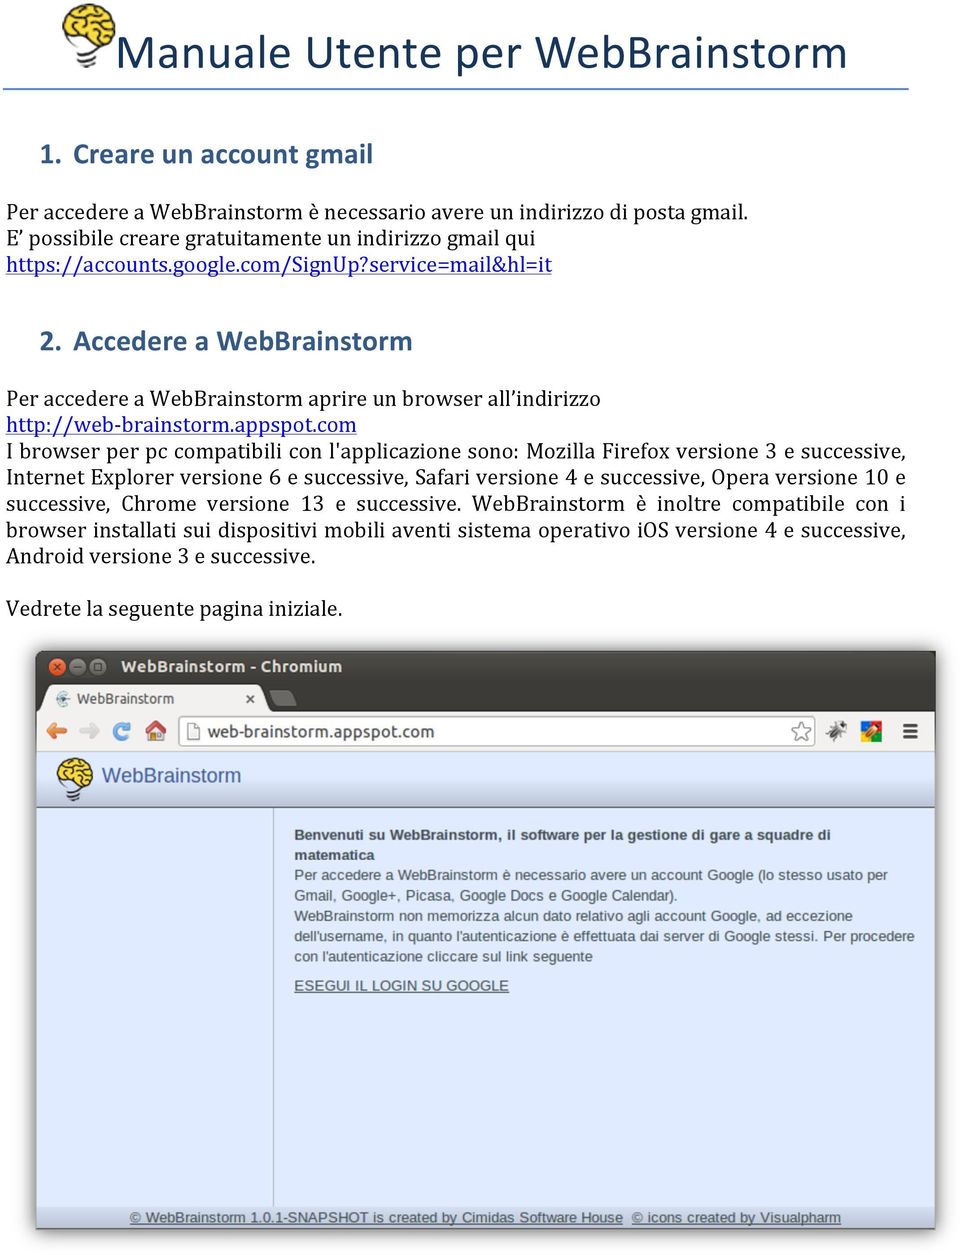 Accedere a WebBrainstorm Per accedere a WebBrainstorm aprire un browser all indirizzo http://web- brainstorm.appspot.